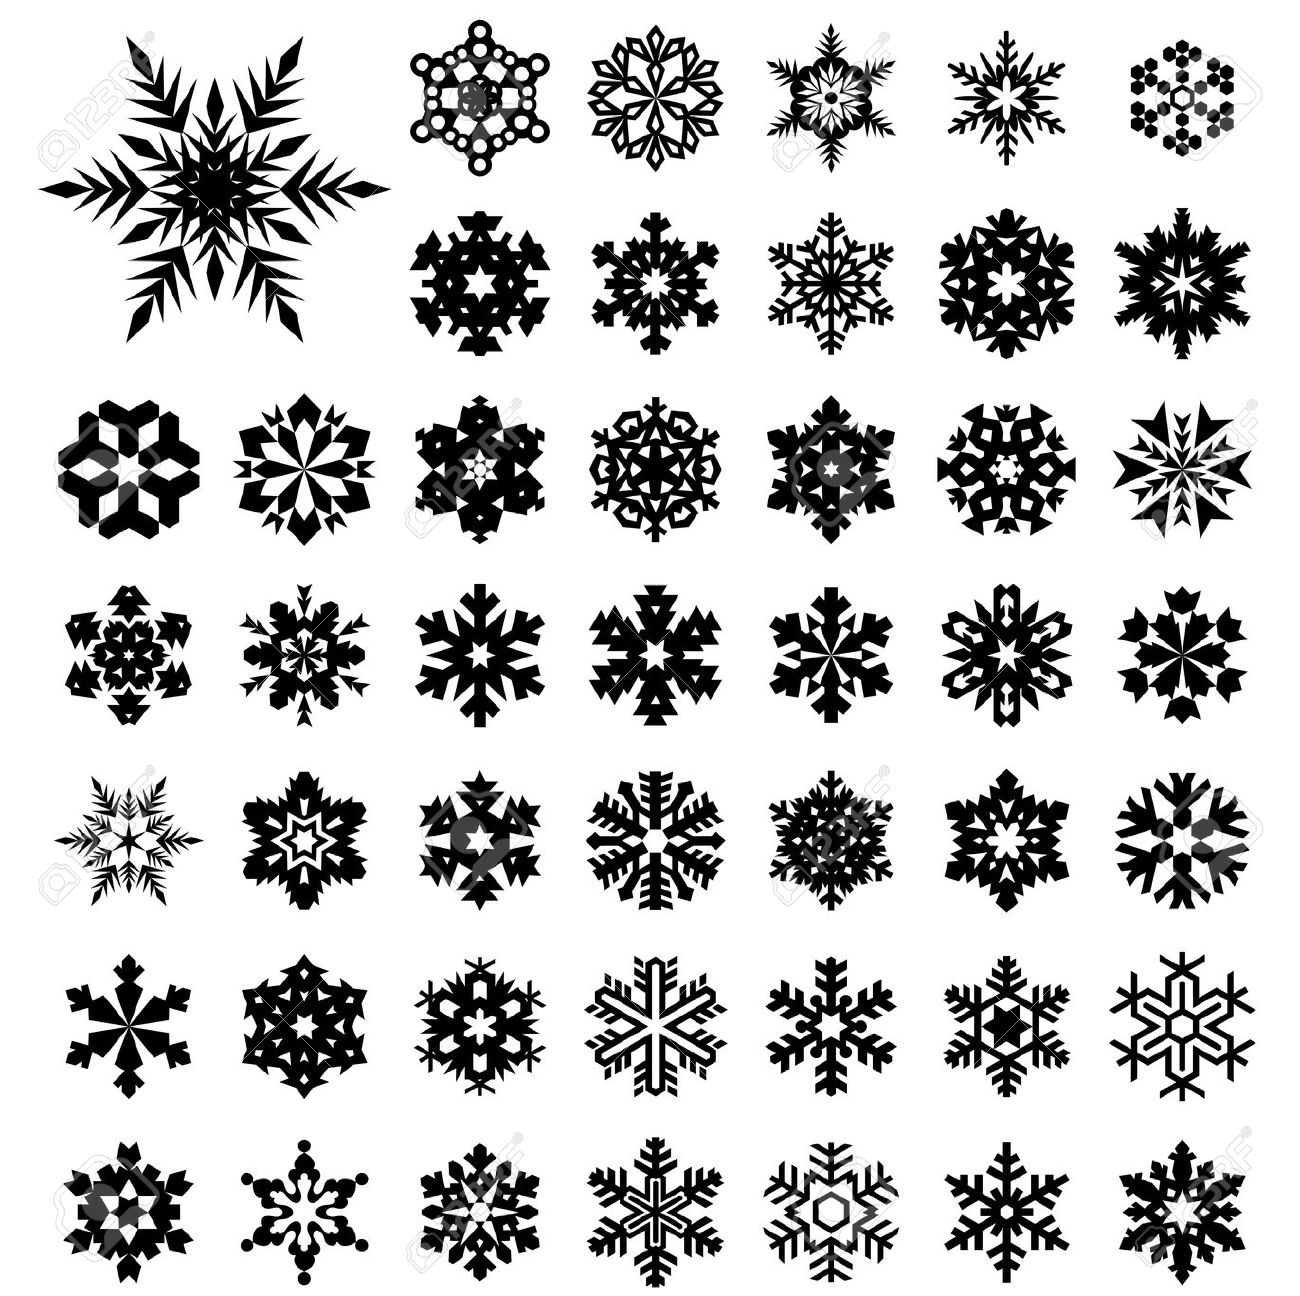 Frozen snowflakes silhouette clipart 